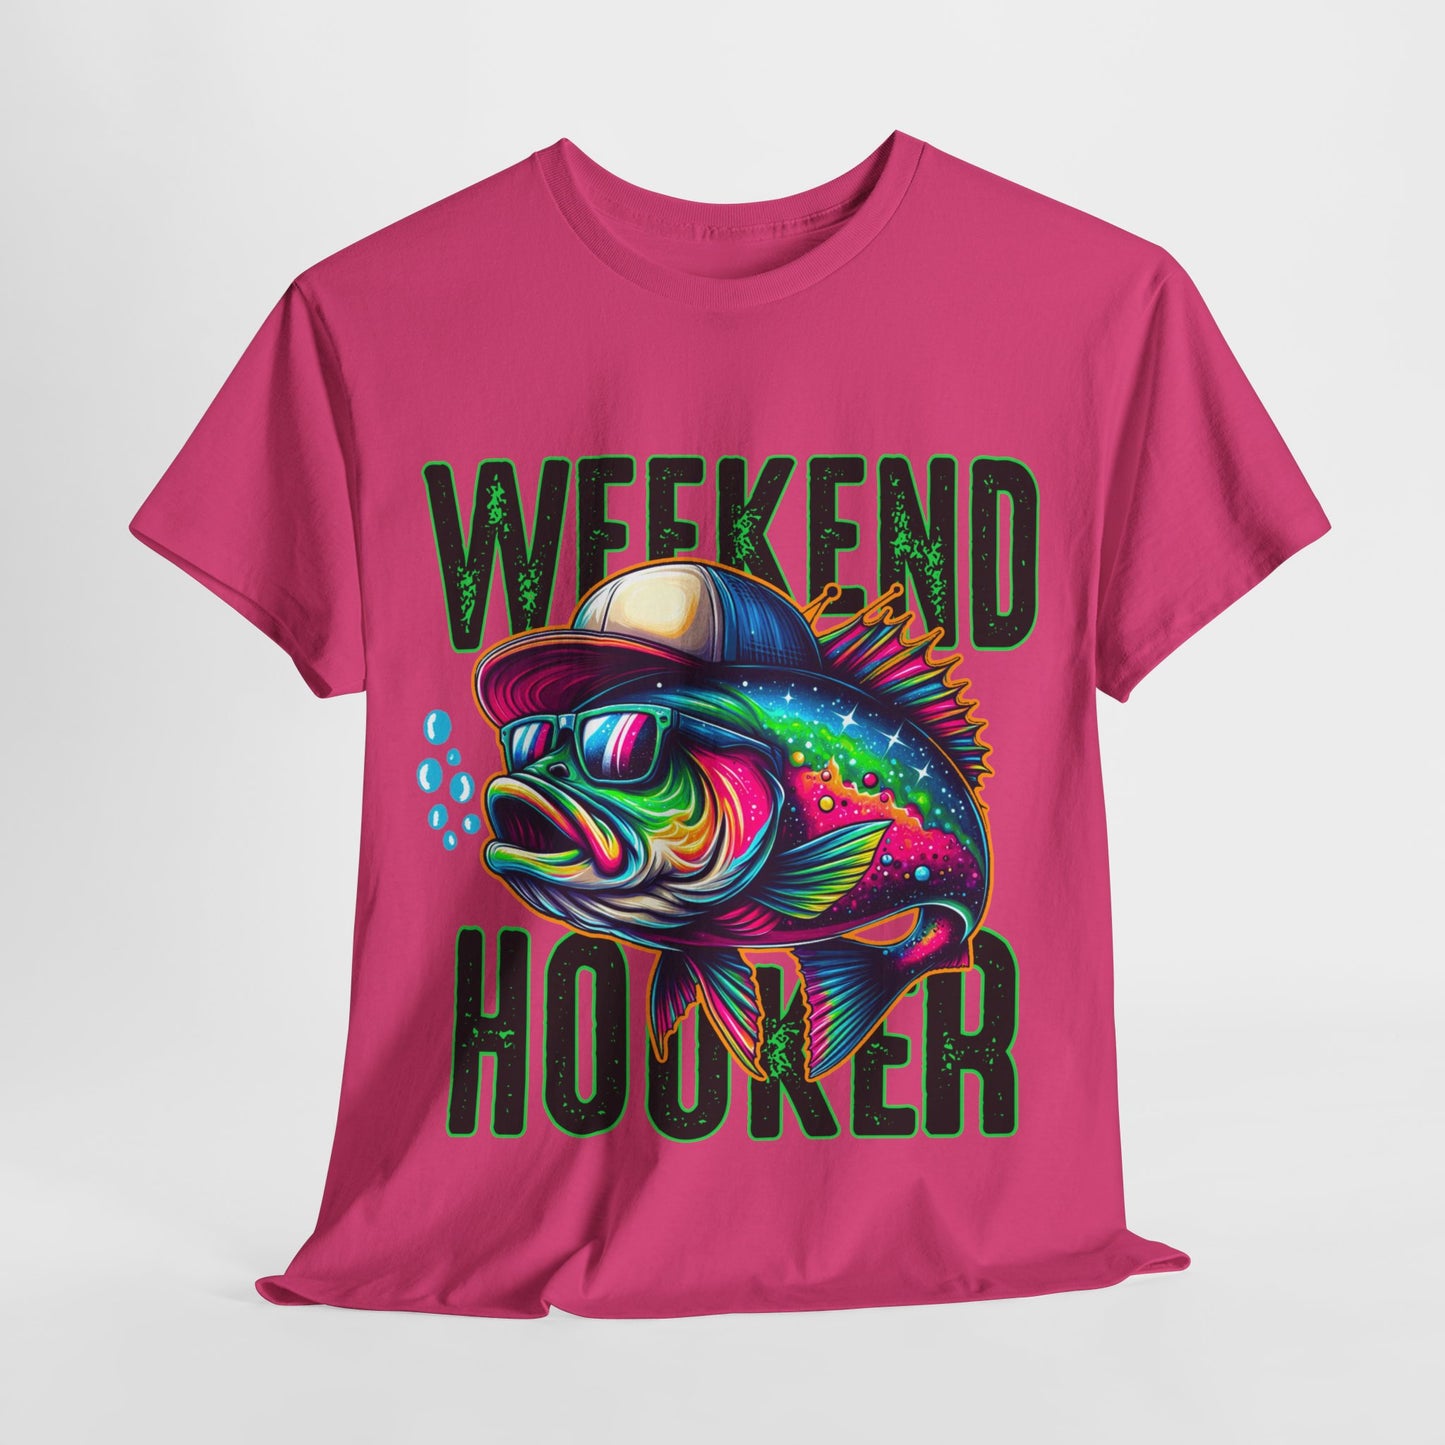 Weekend Hooker Fishing Tshirt